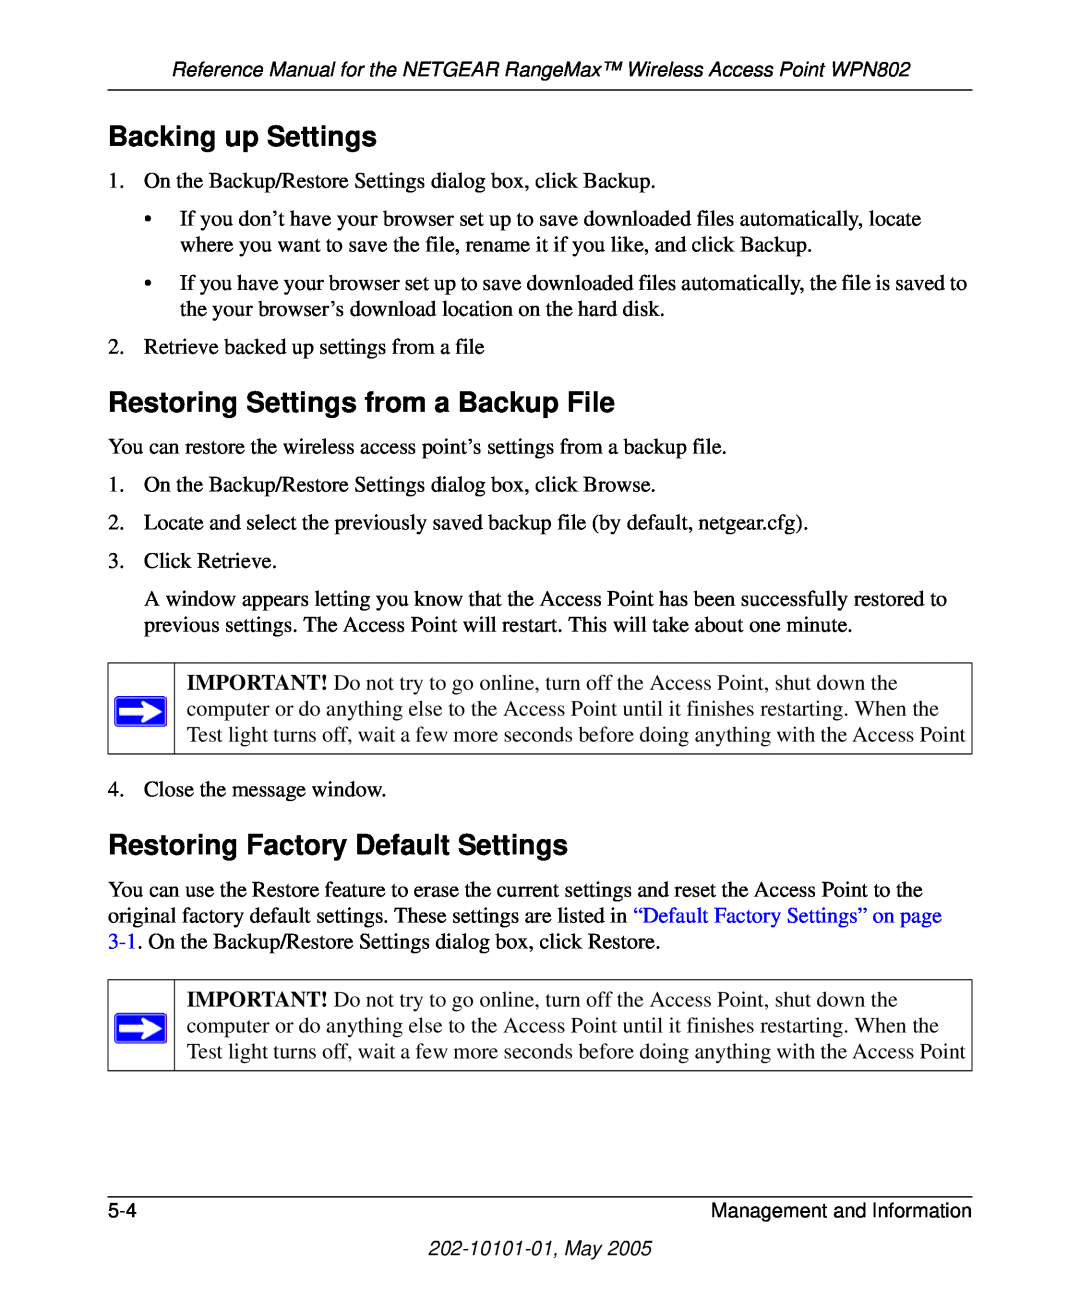 NETGEAR WPN802 manual Backing up Settings, Restoring Settings from a Backup File, Restoring Factory Default Settings 